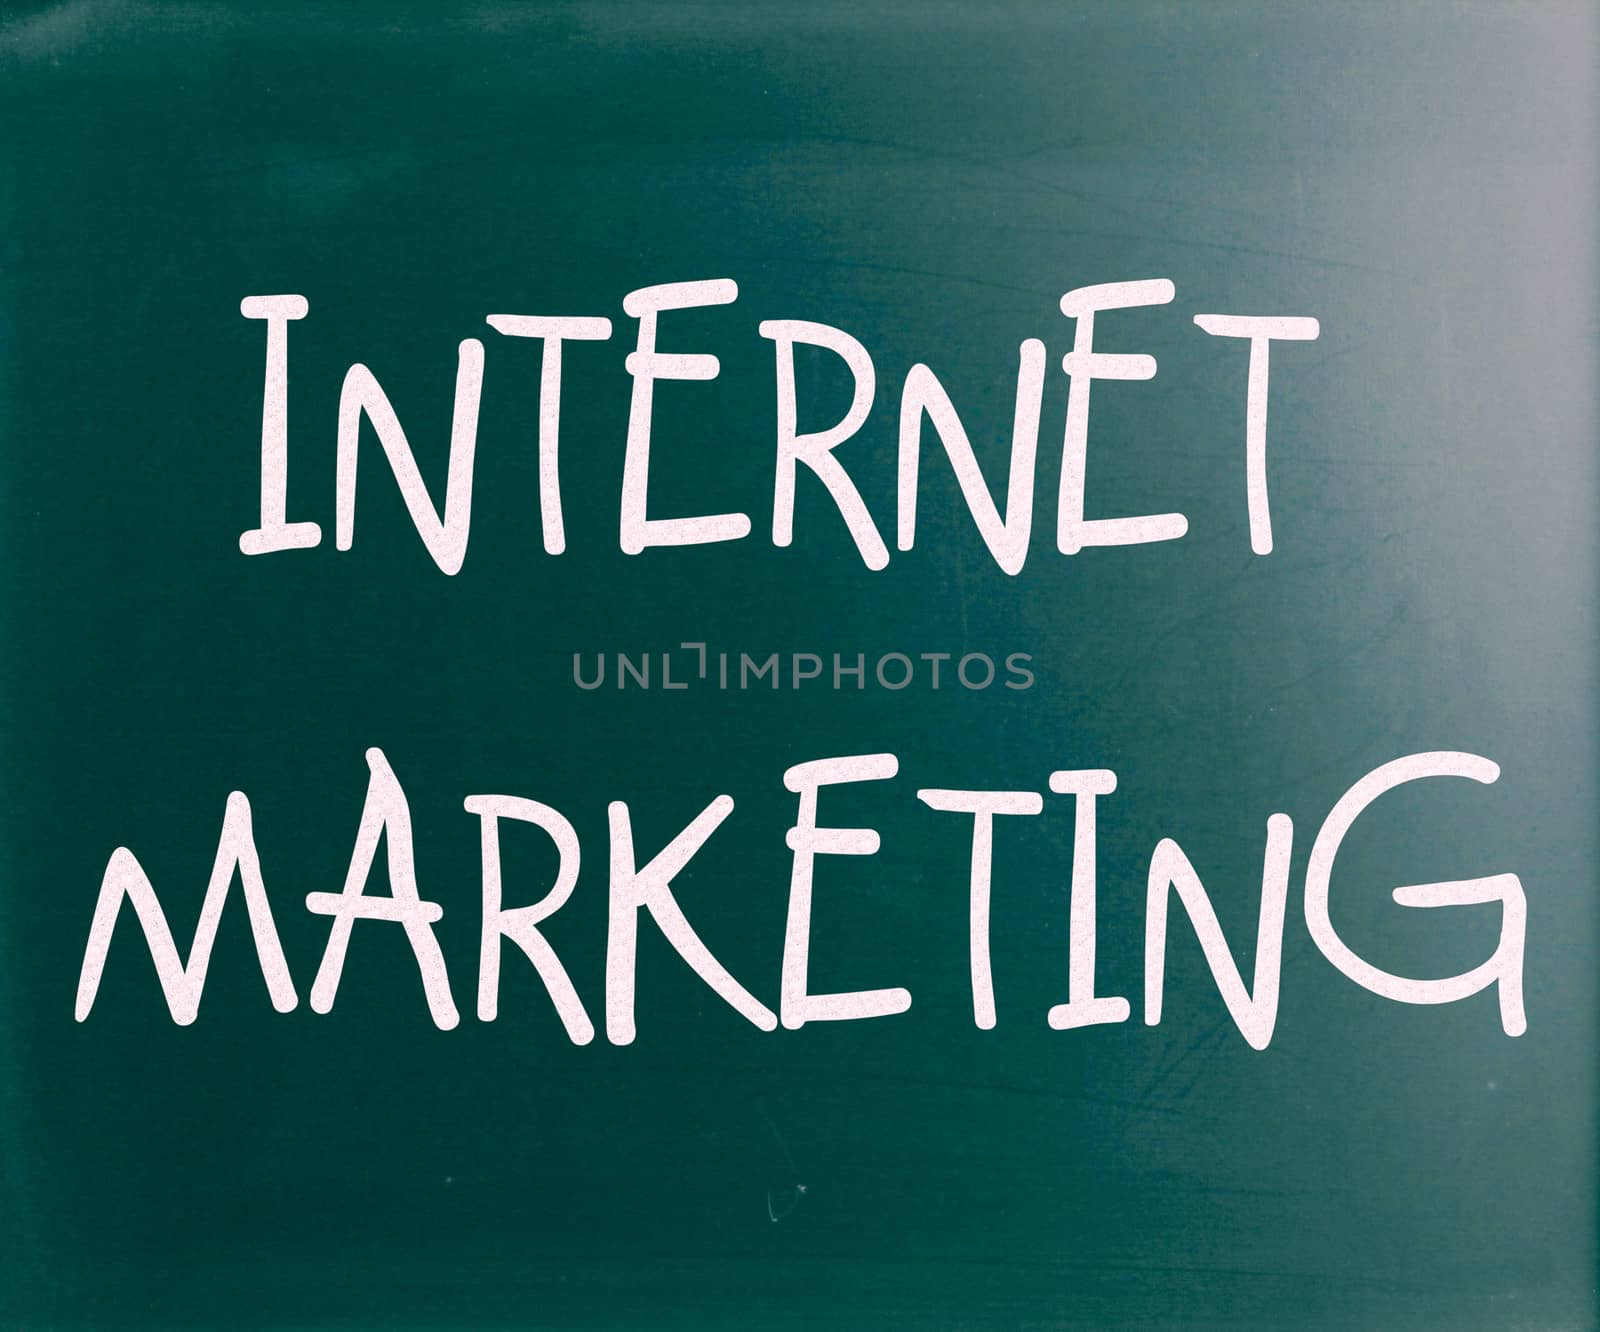 "Internet marketing" handwritten with white chalk on a blackboard